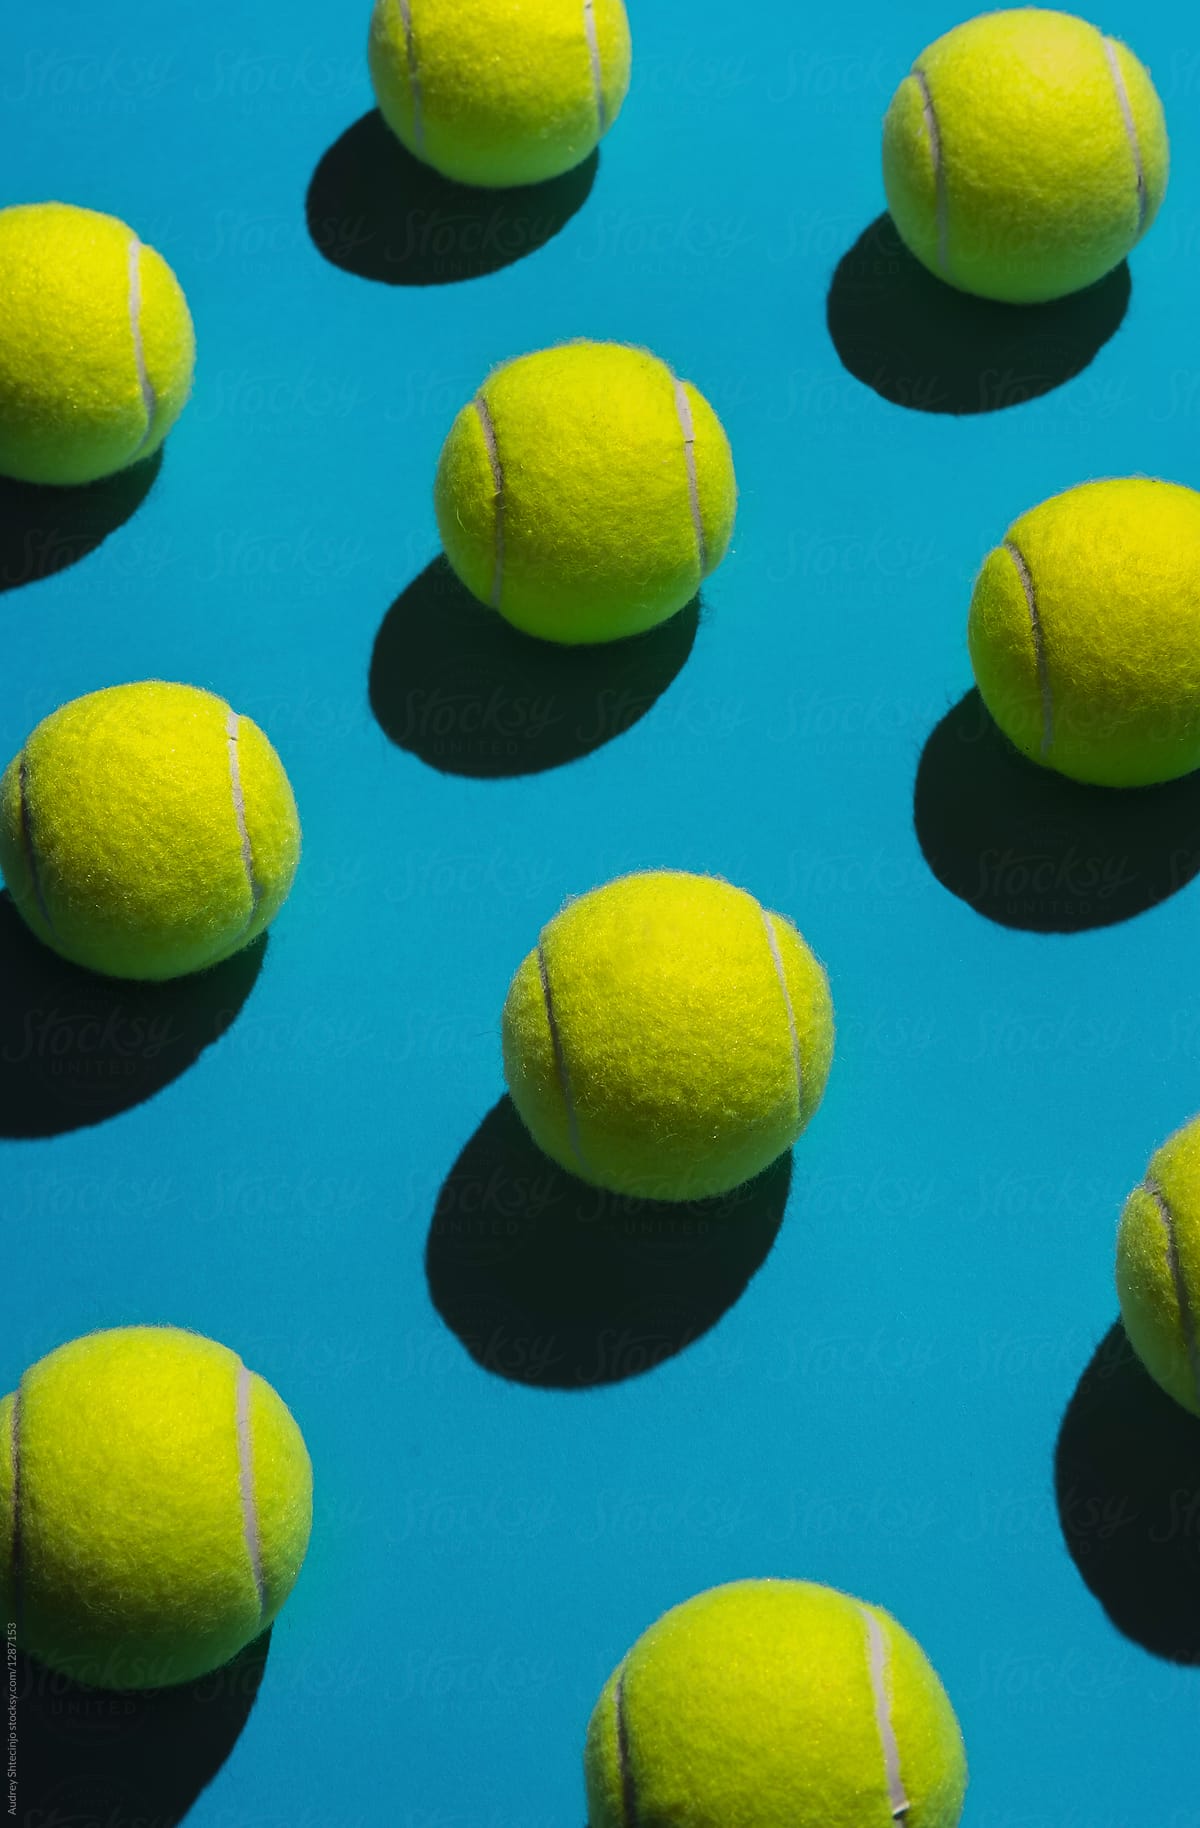 Tennis balls arranged.